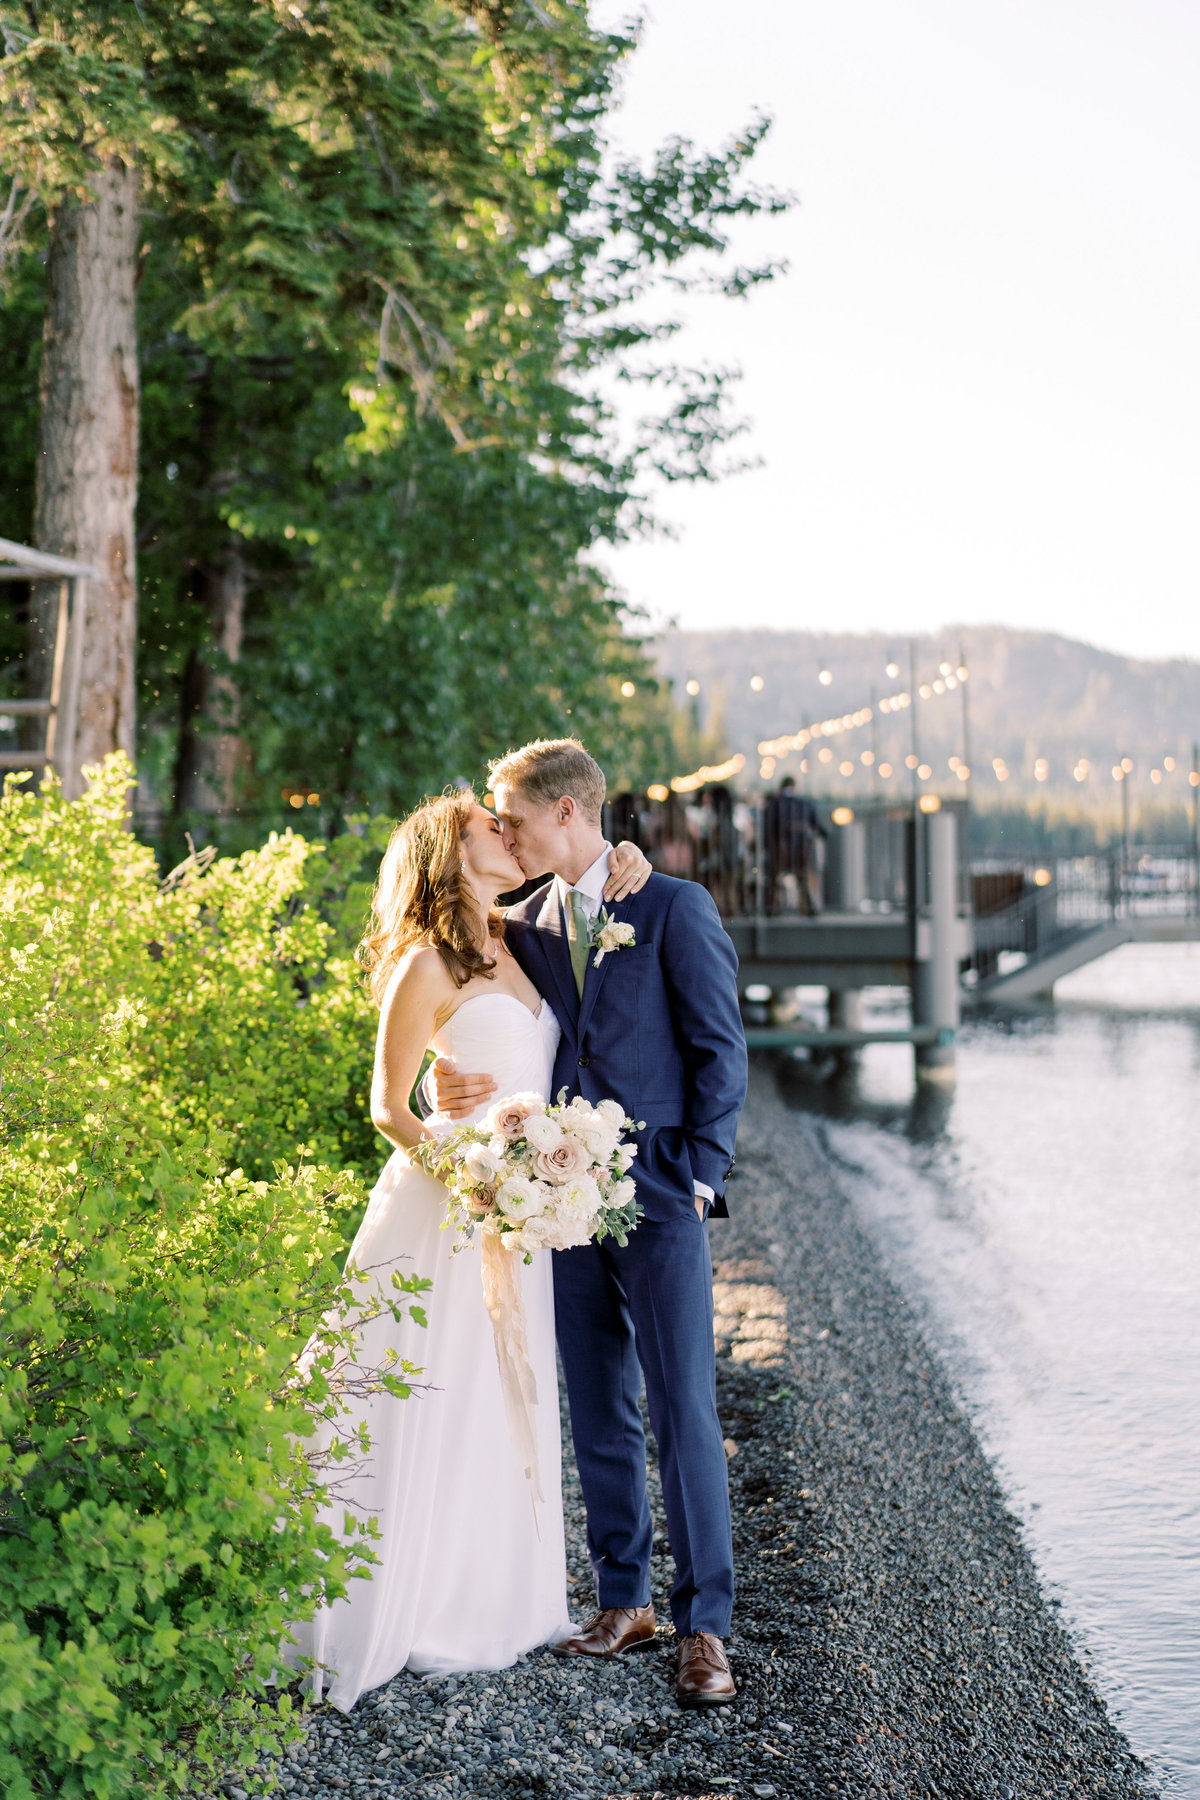 Alison + Will Tahoe West Shore Cafe Wedding Sneak Peeks | Cassie Valente Photography 0094